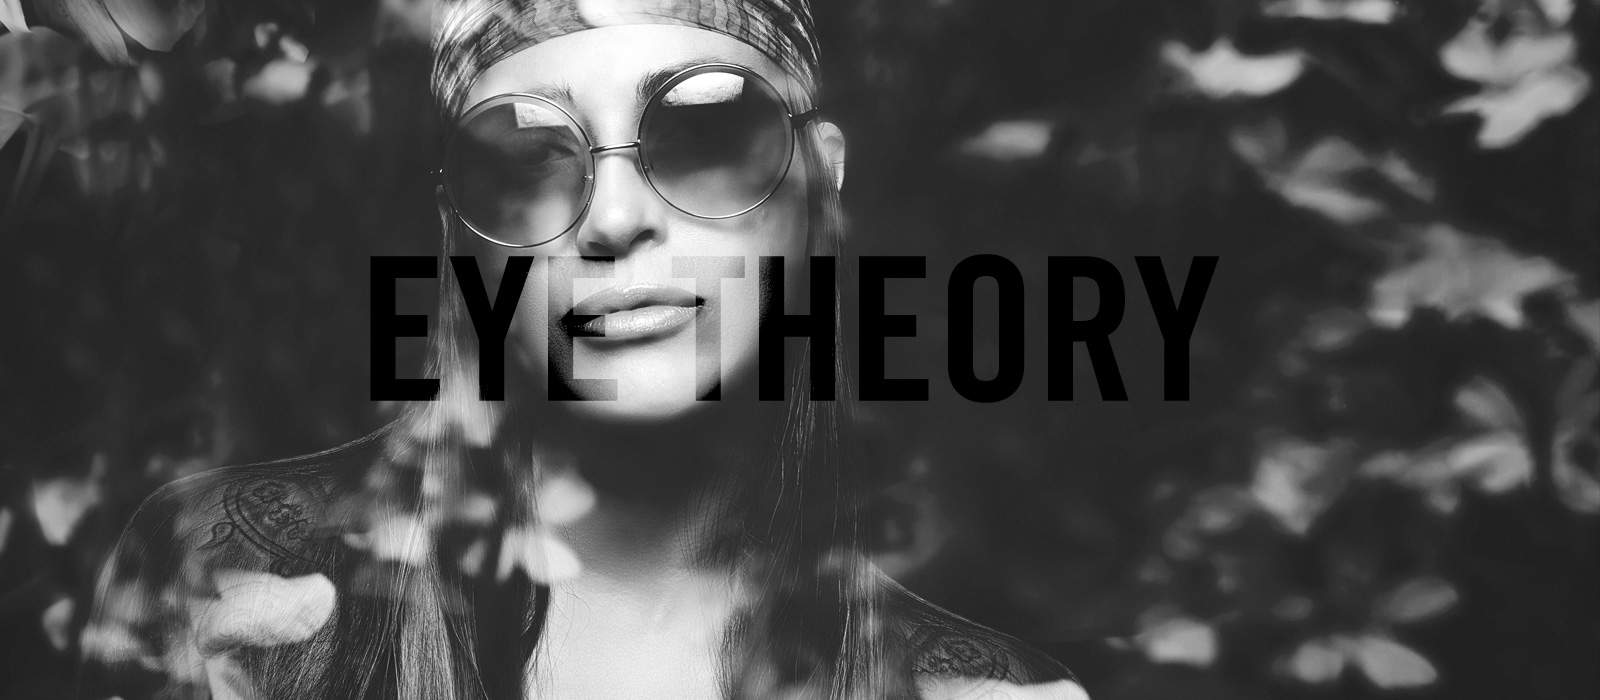 Eye theory homepage banner2